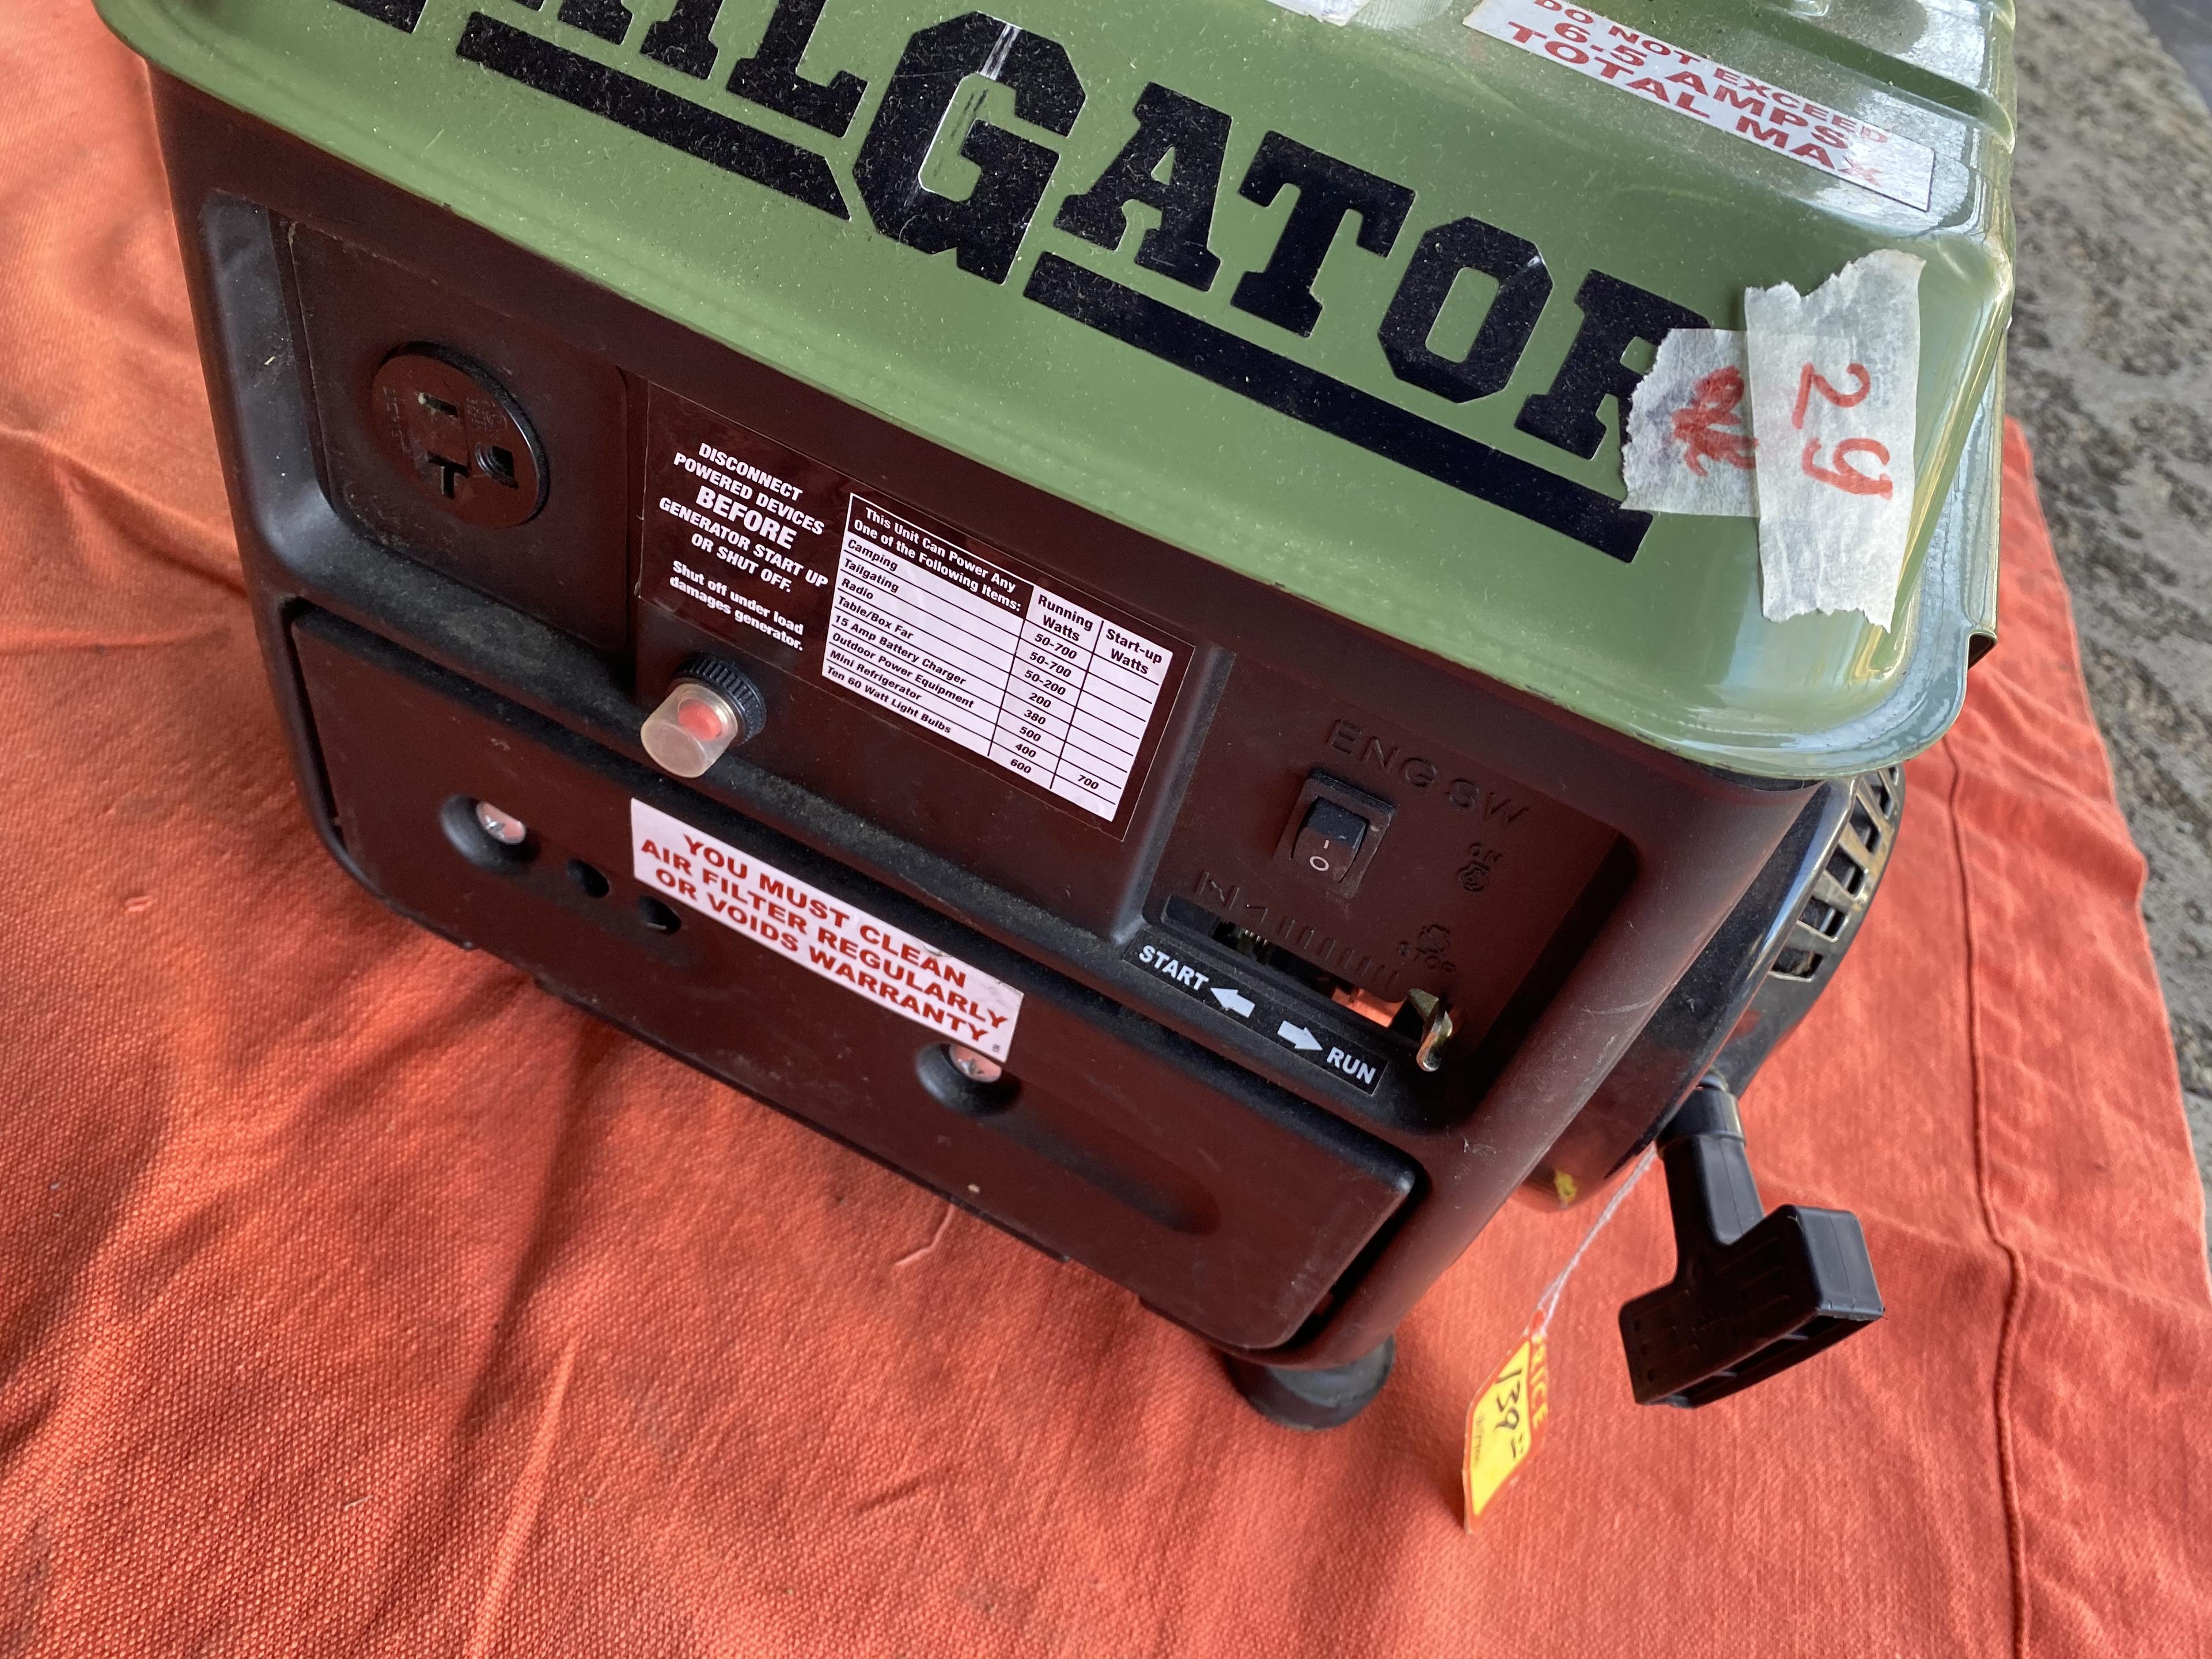 Tailgator Small Sized Portable Generator